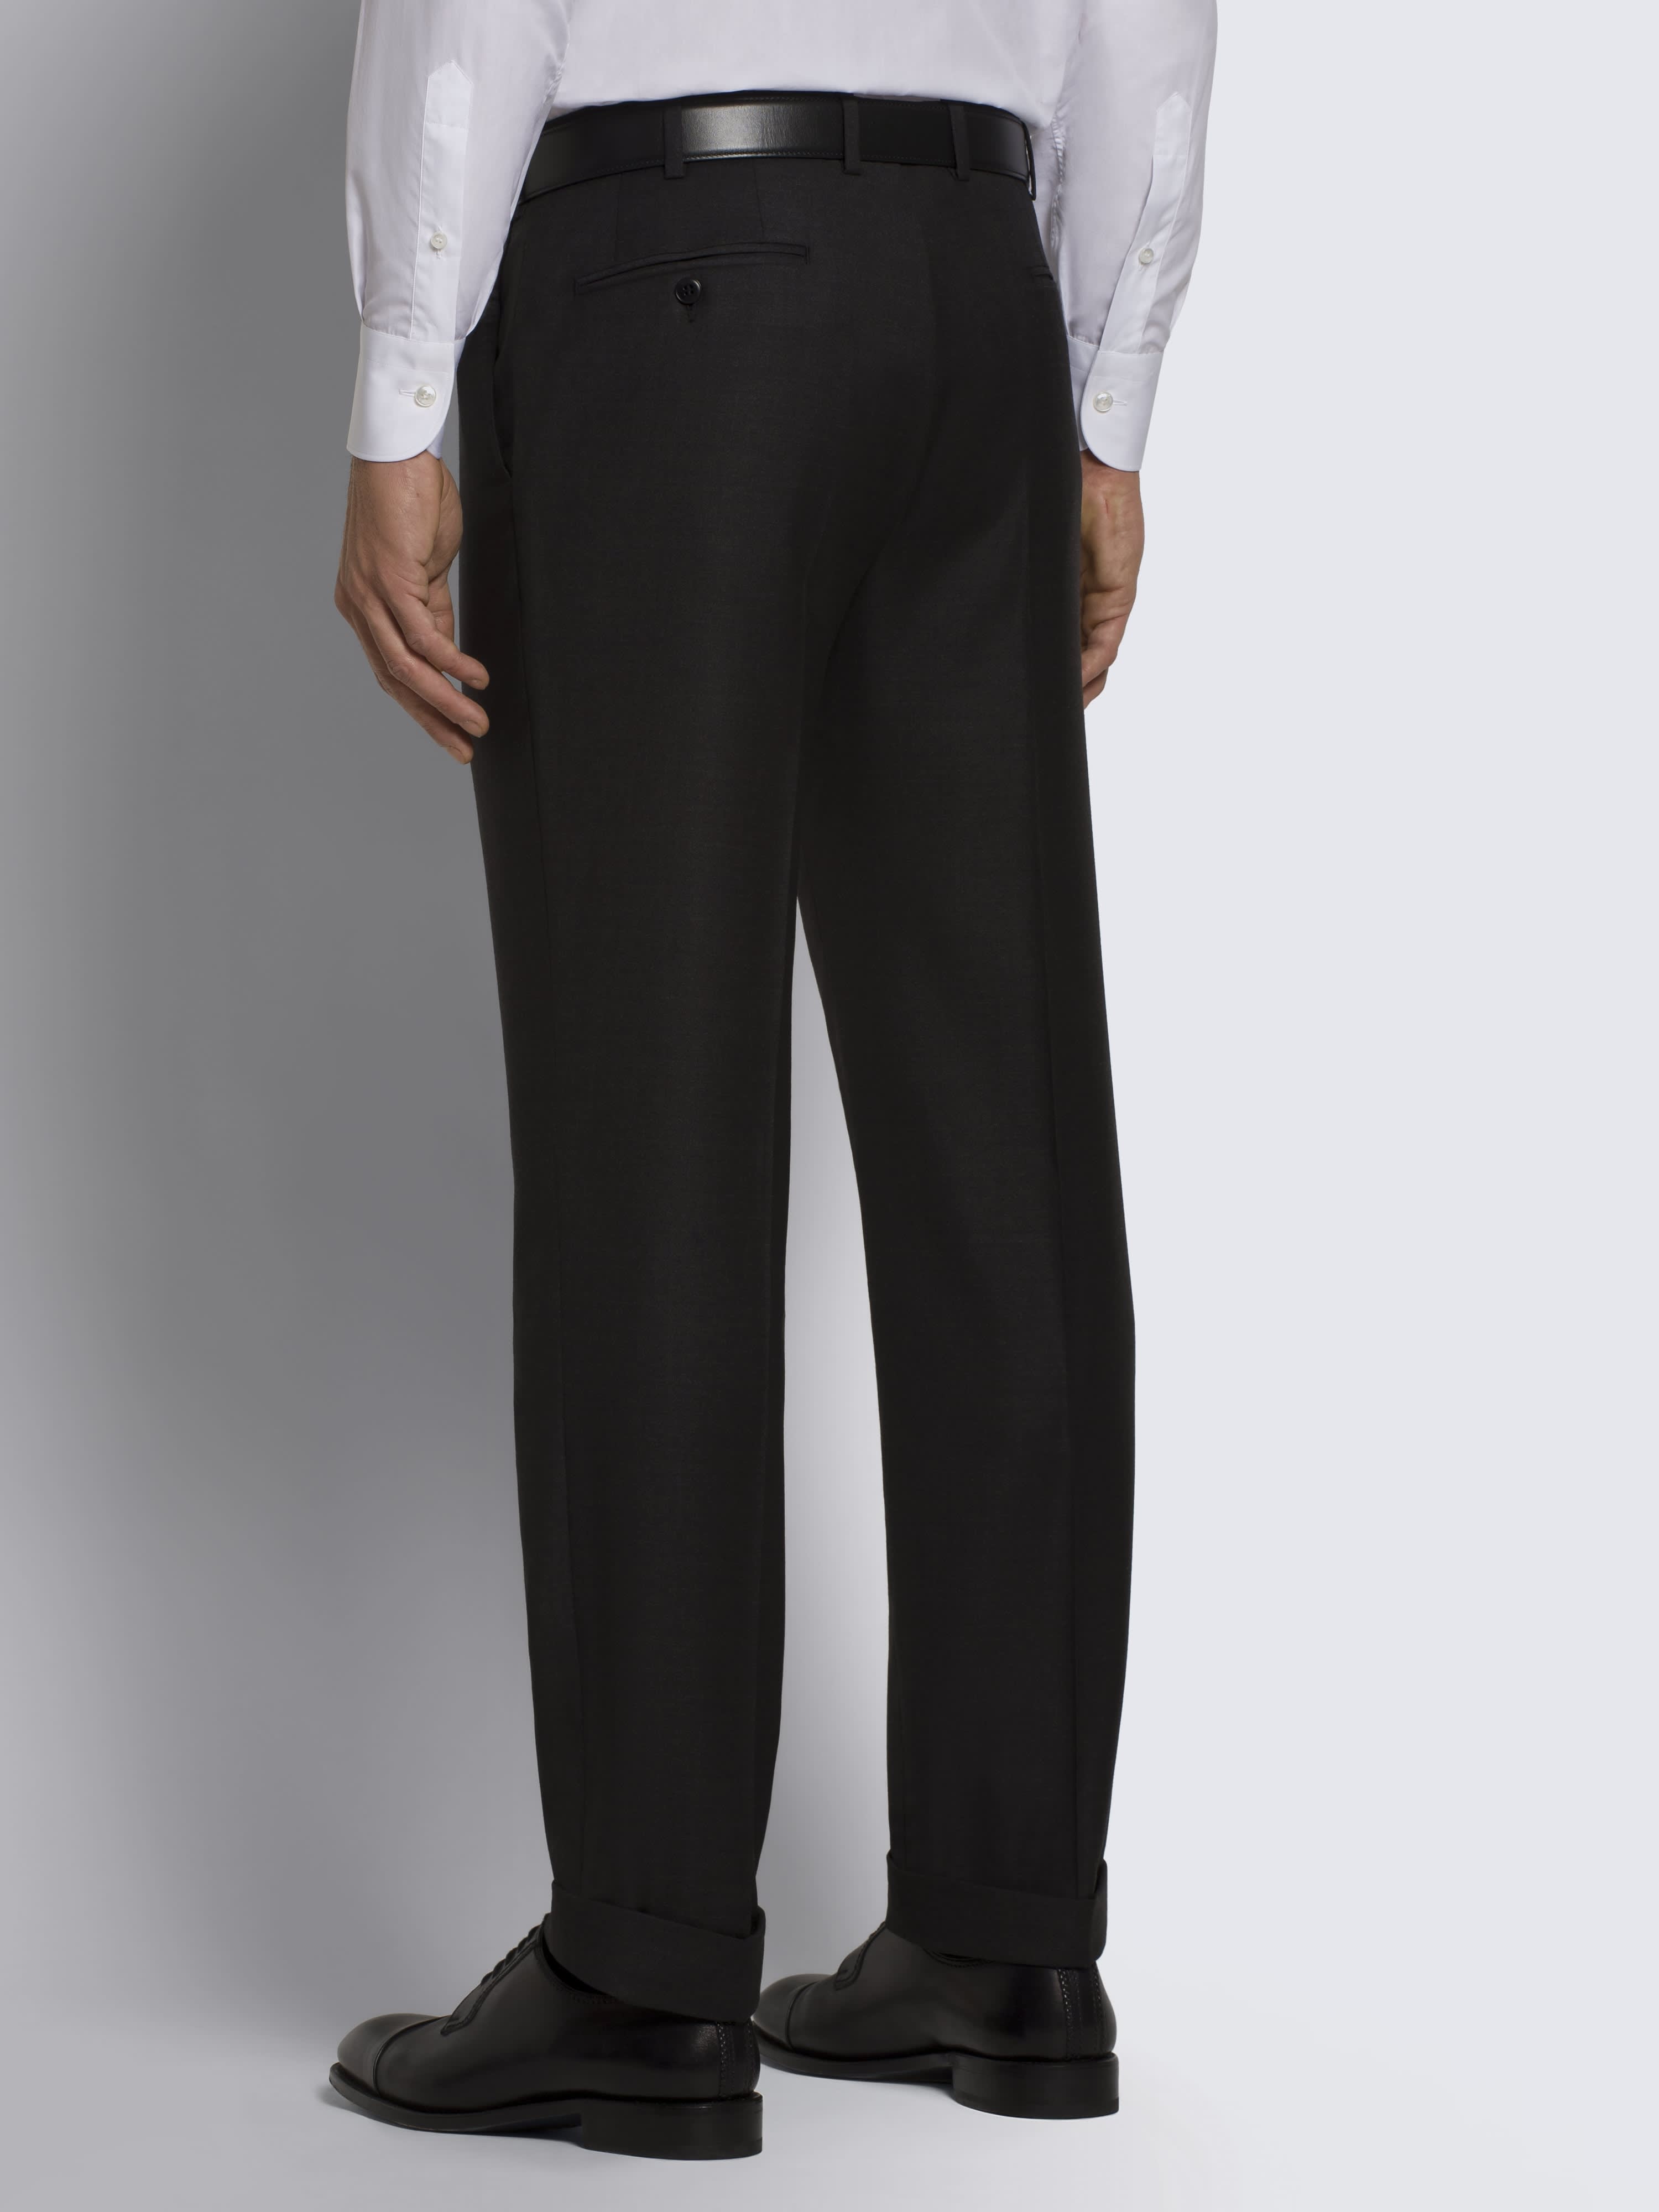 'Essential' grey Tigullio trousers | Brioni® US Official Store